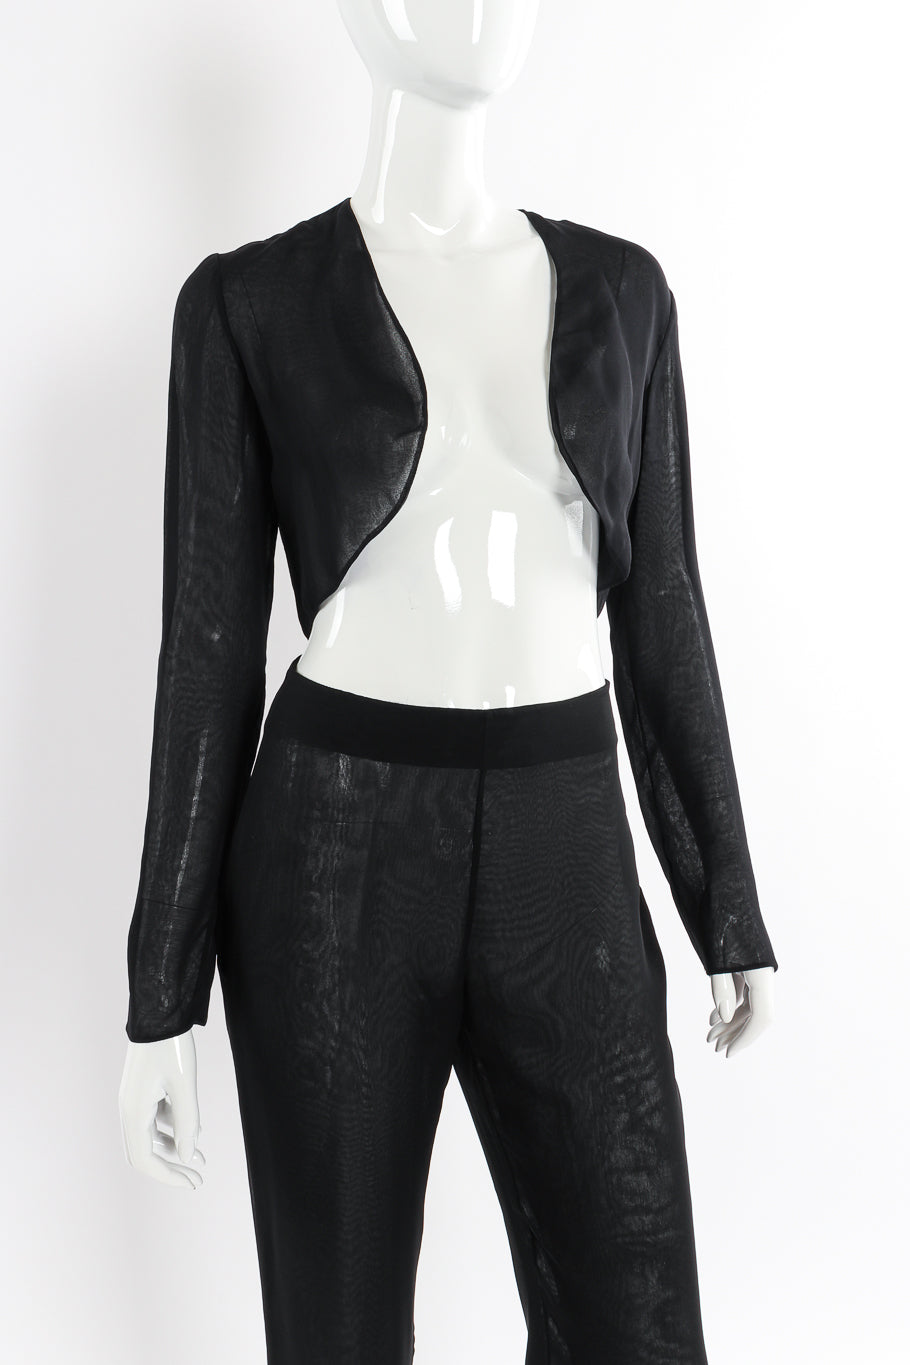 Vintage Richard Tyler Silk Bolero Top and Pants Set front view on mannequin closeup @Recessla